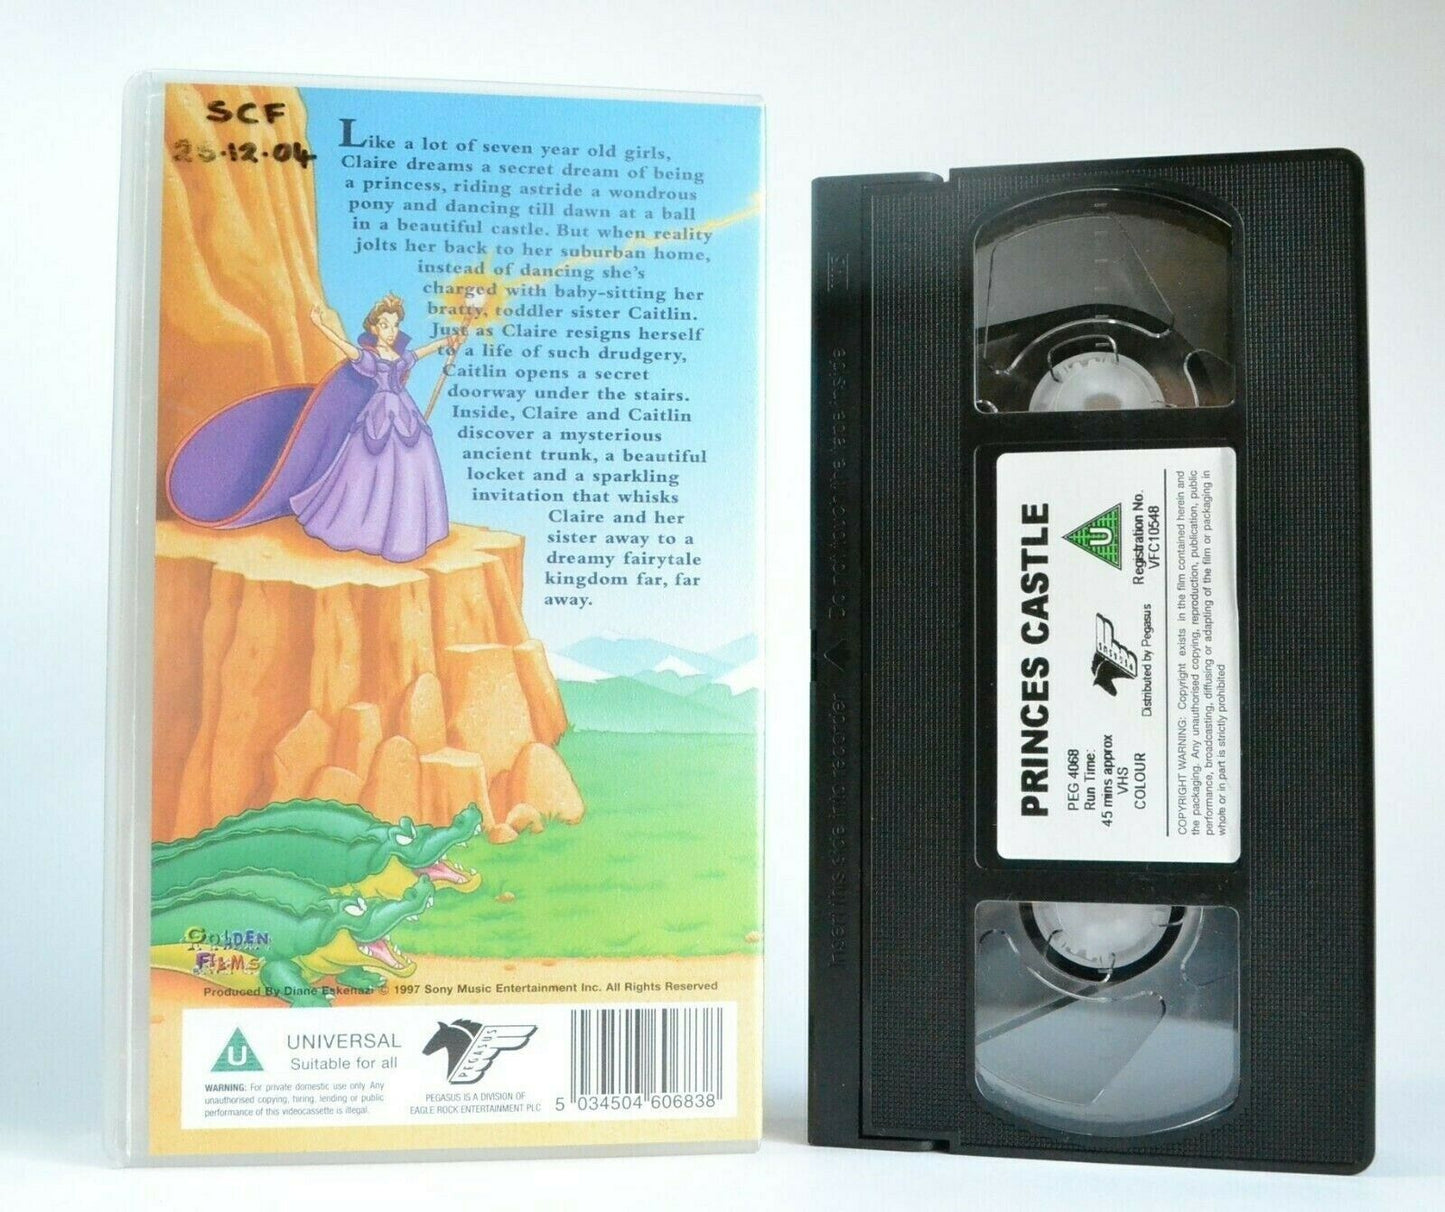 The Princess Castle (1996) - Animated Fairytale Fantasy - Children's - Pal VHS-